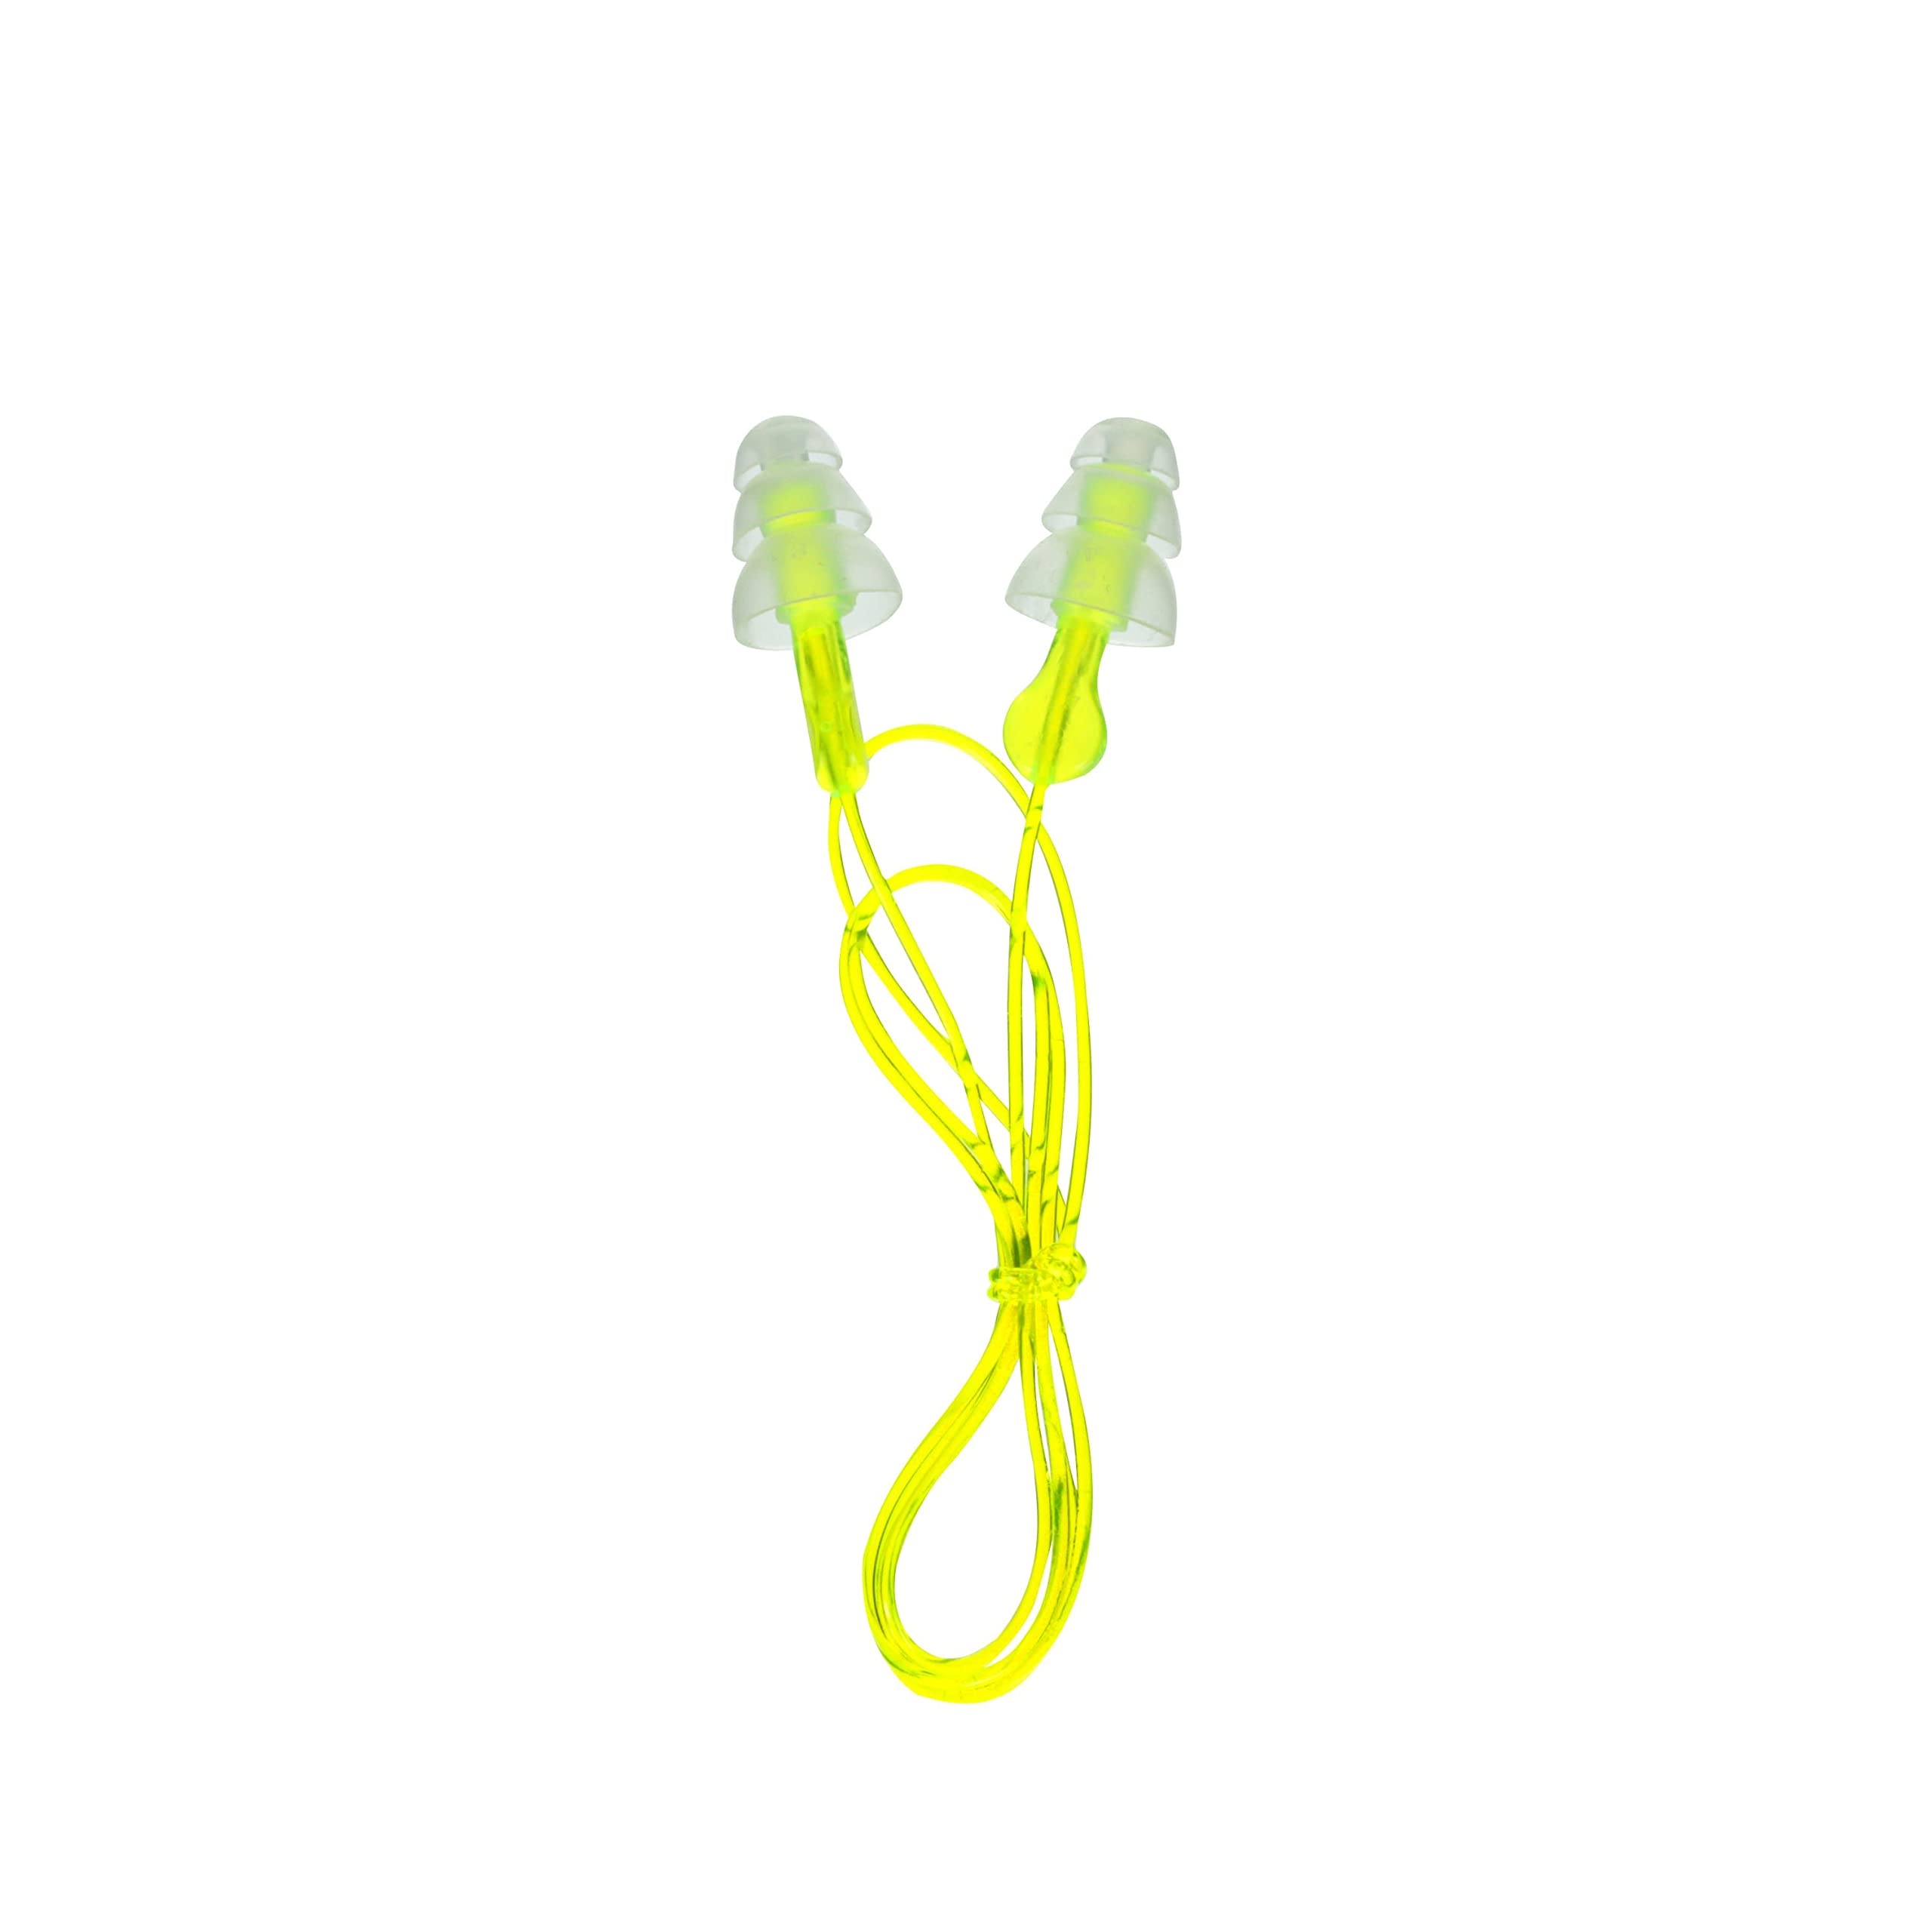 Peltor Sport Tri-Flange Corded Reusable Earplugs, 26 Db Nrr, 3-Pair Per Pack